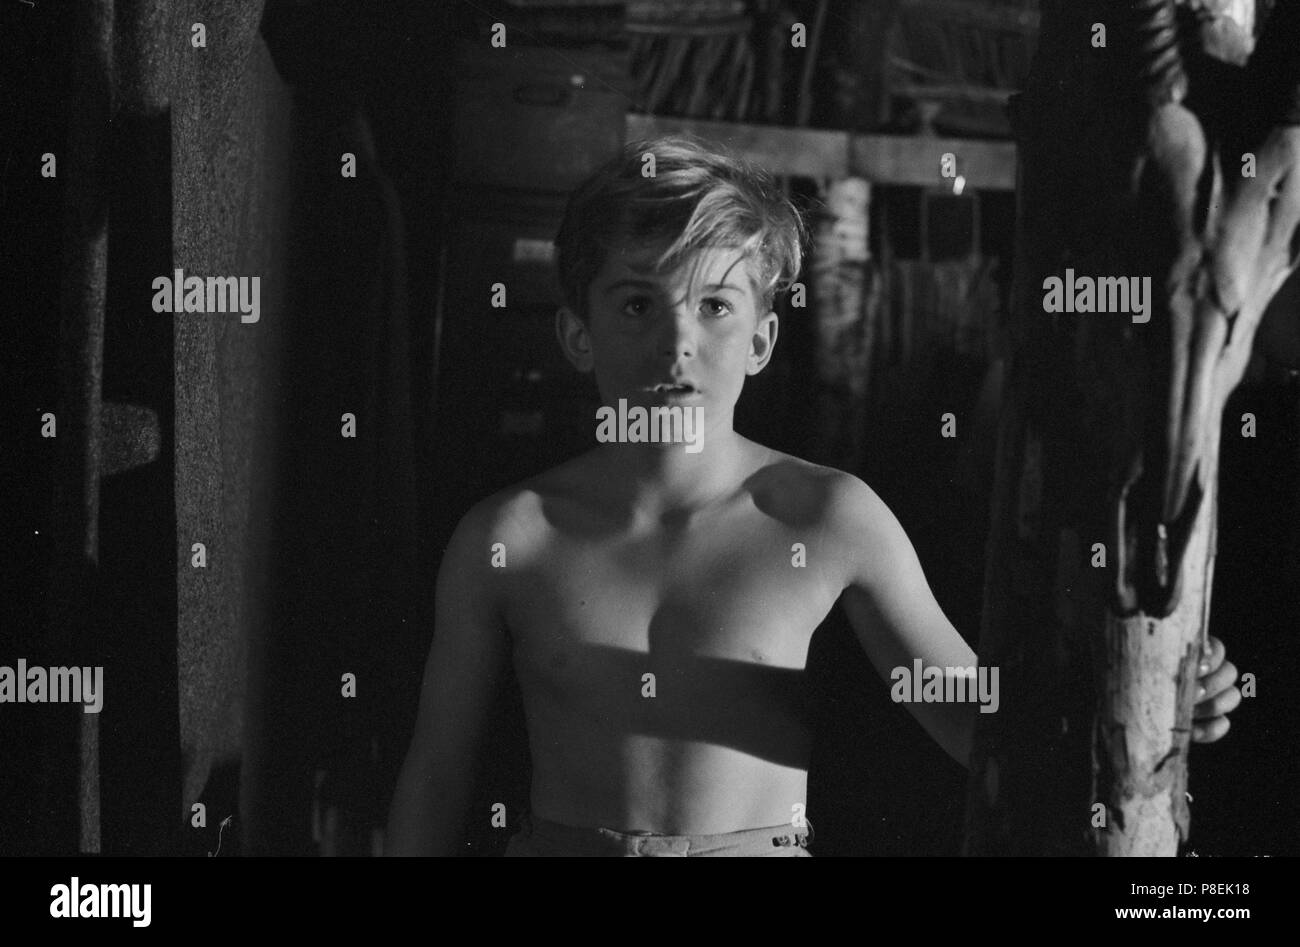 Sammy Going South (1963) Fergus McClelland, Date: 1963 Stock Photo - Alamy